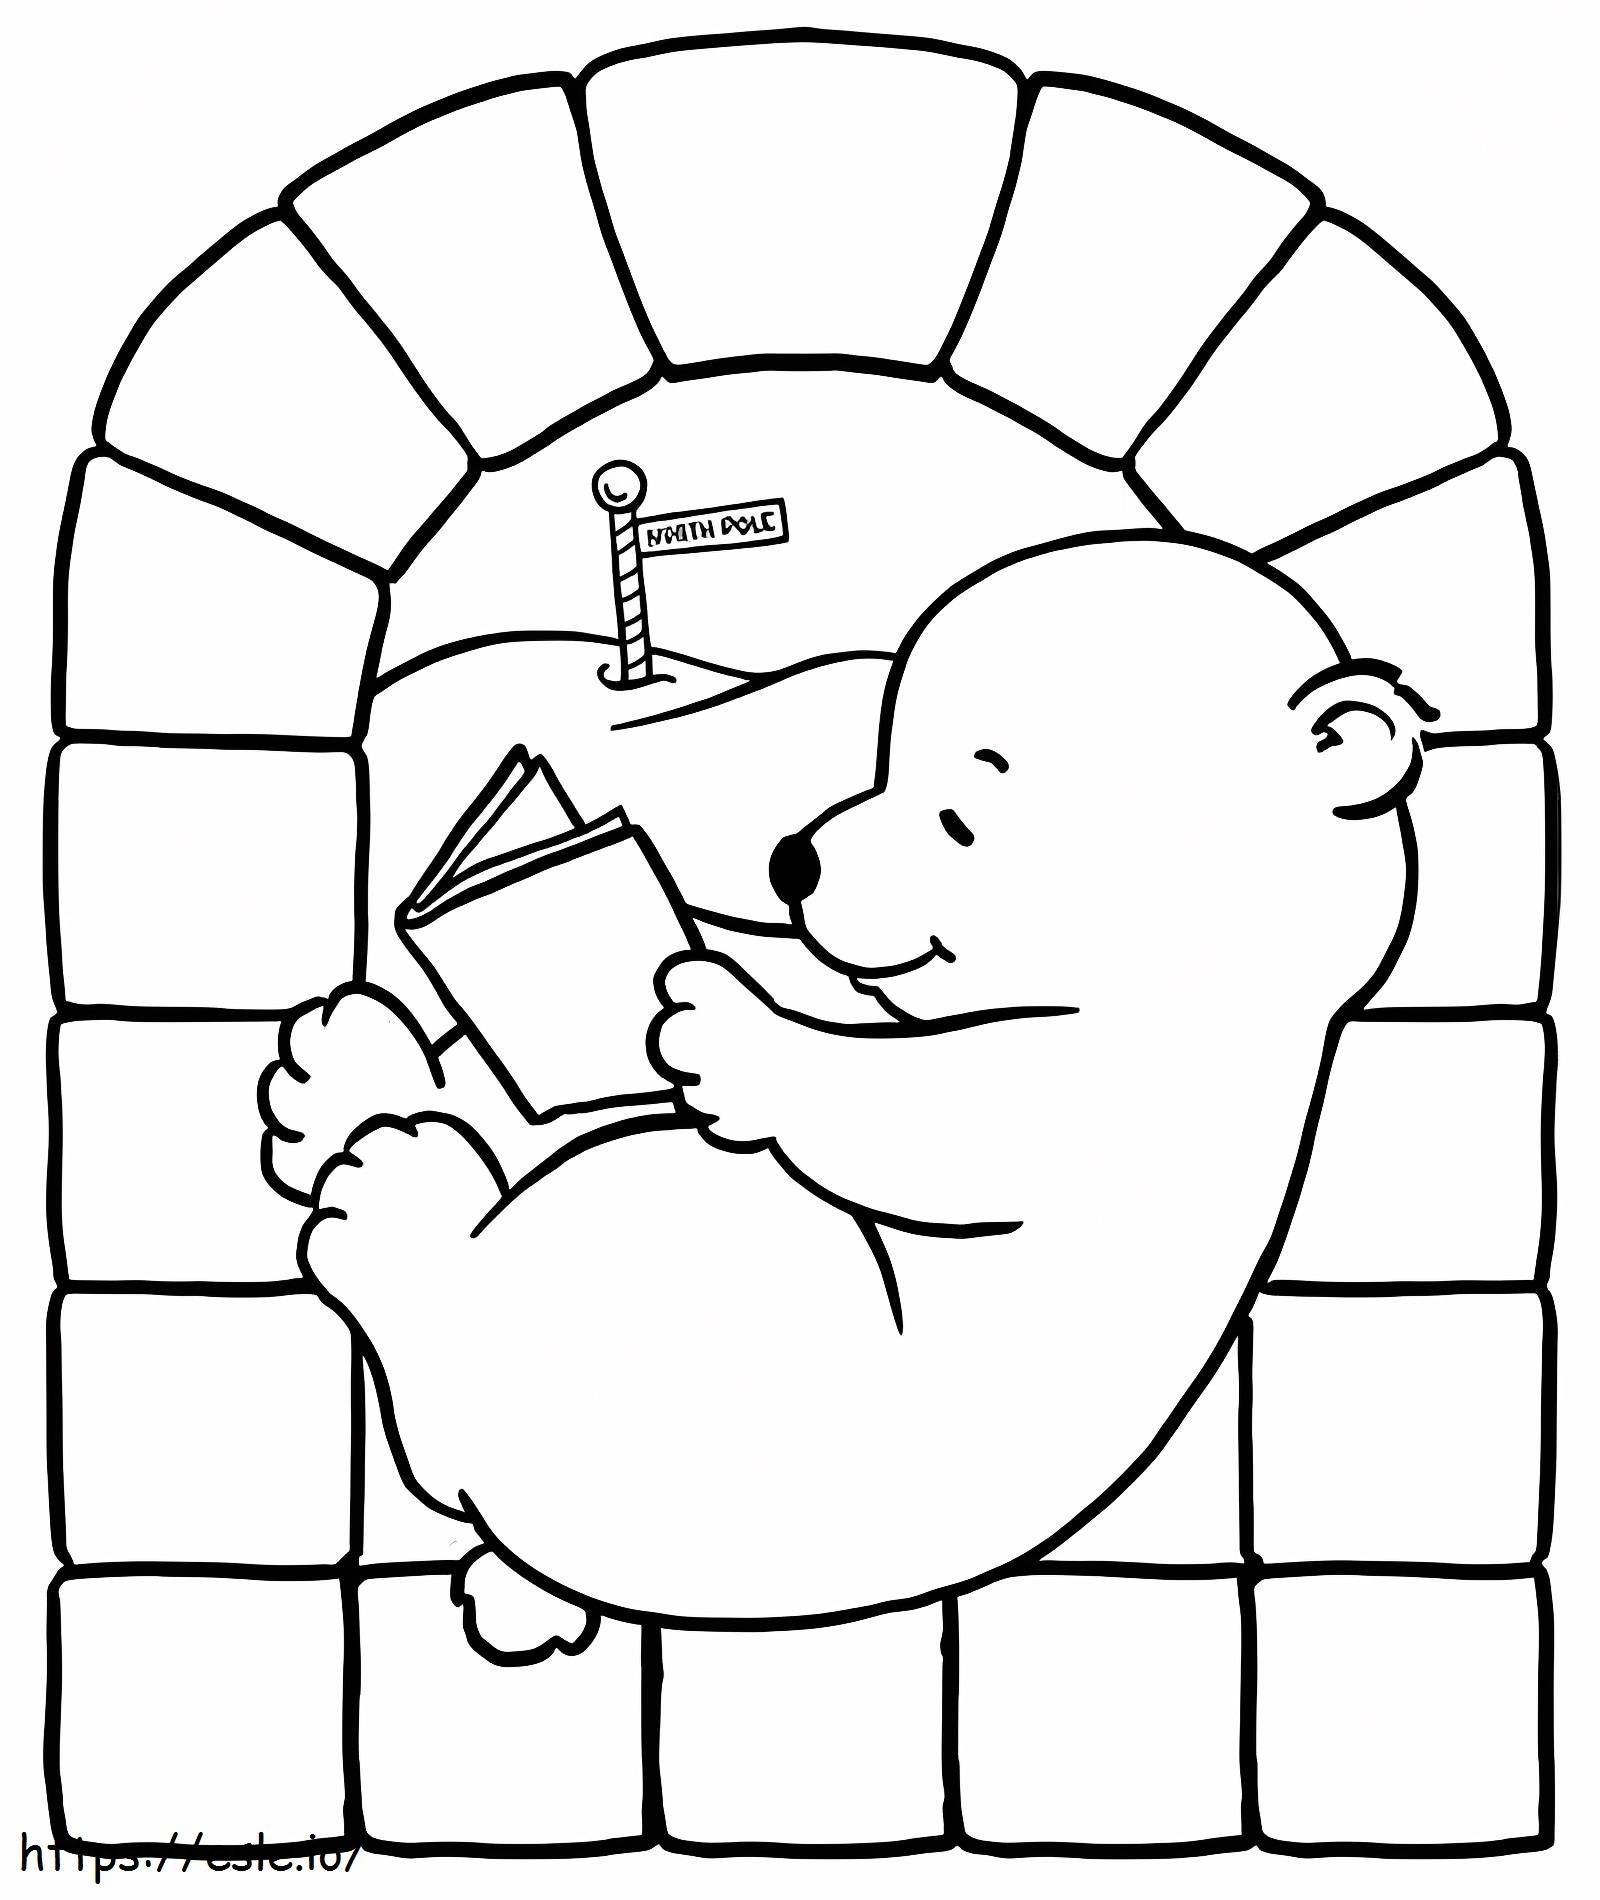 Baby-Eisbär-Lesebuch ausmalbilder